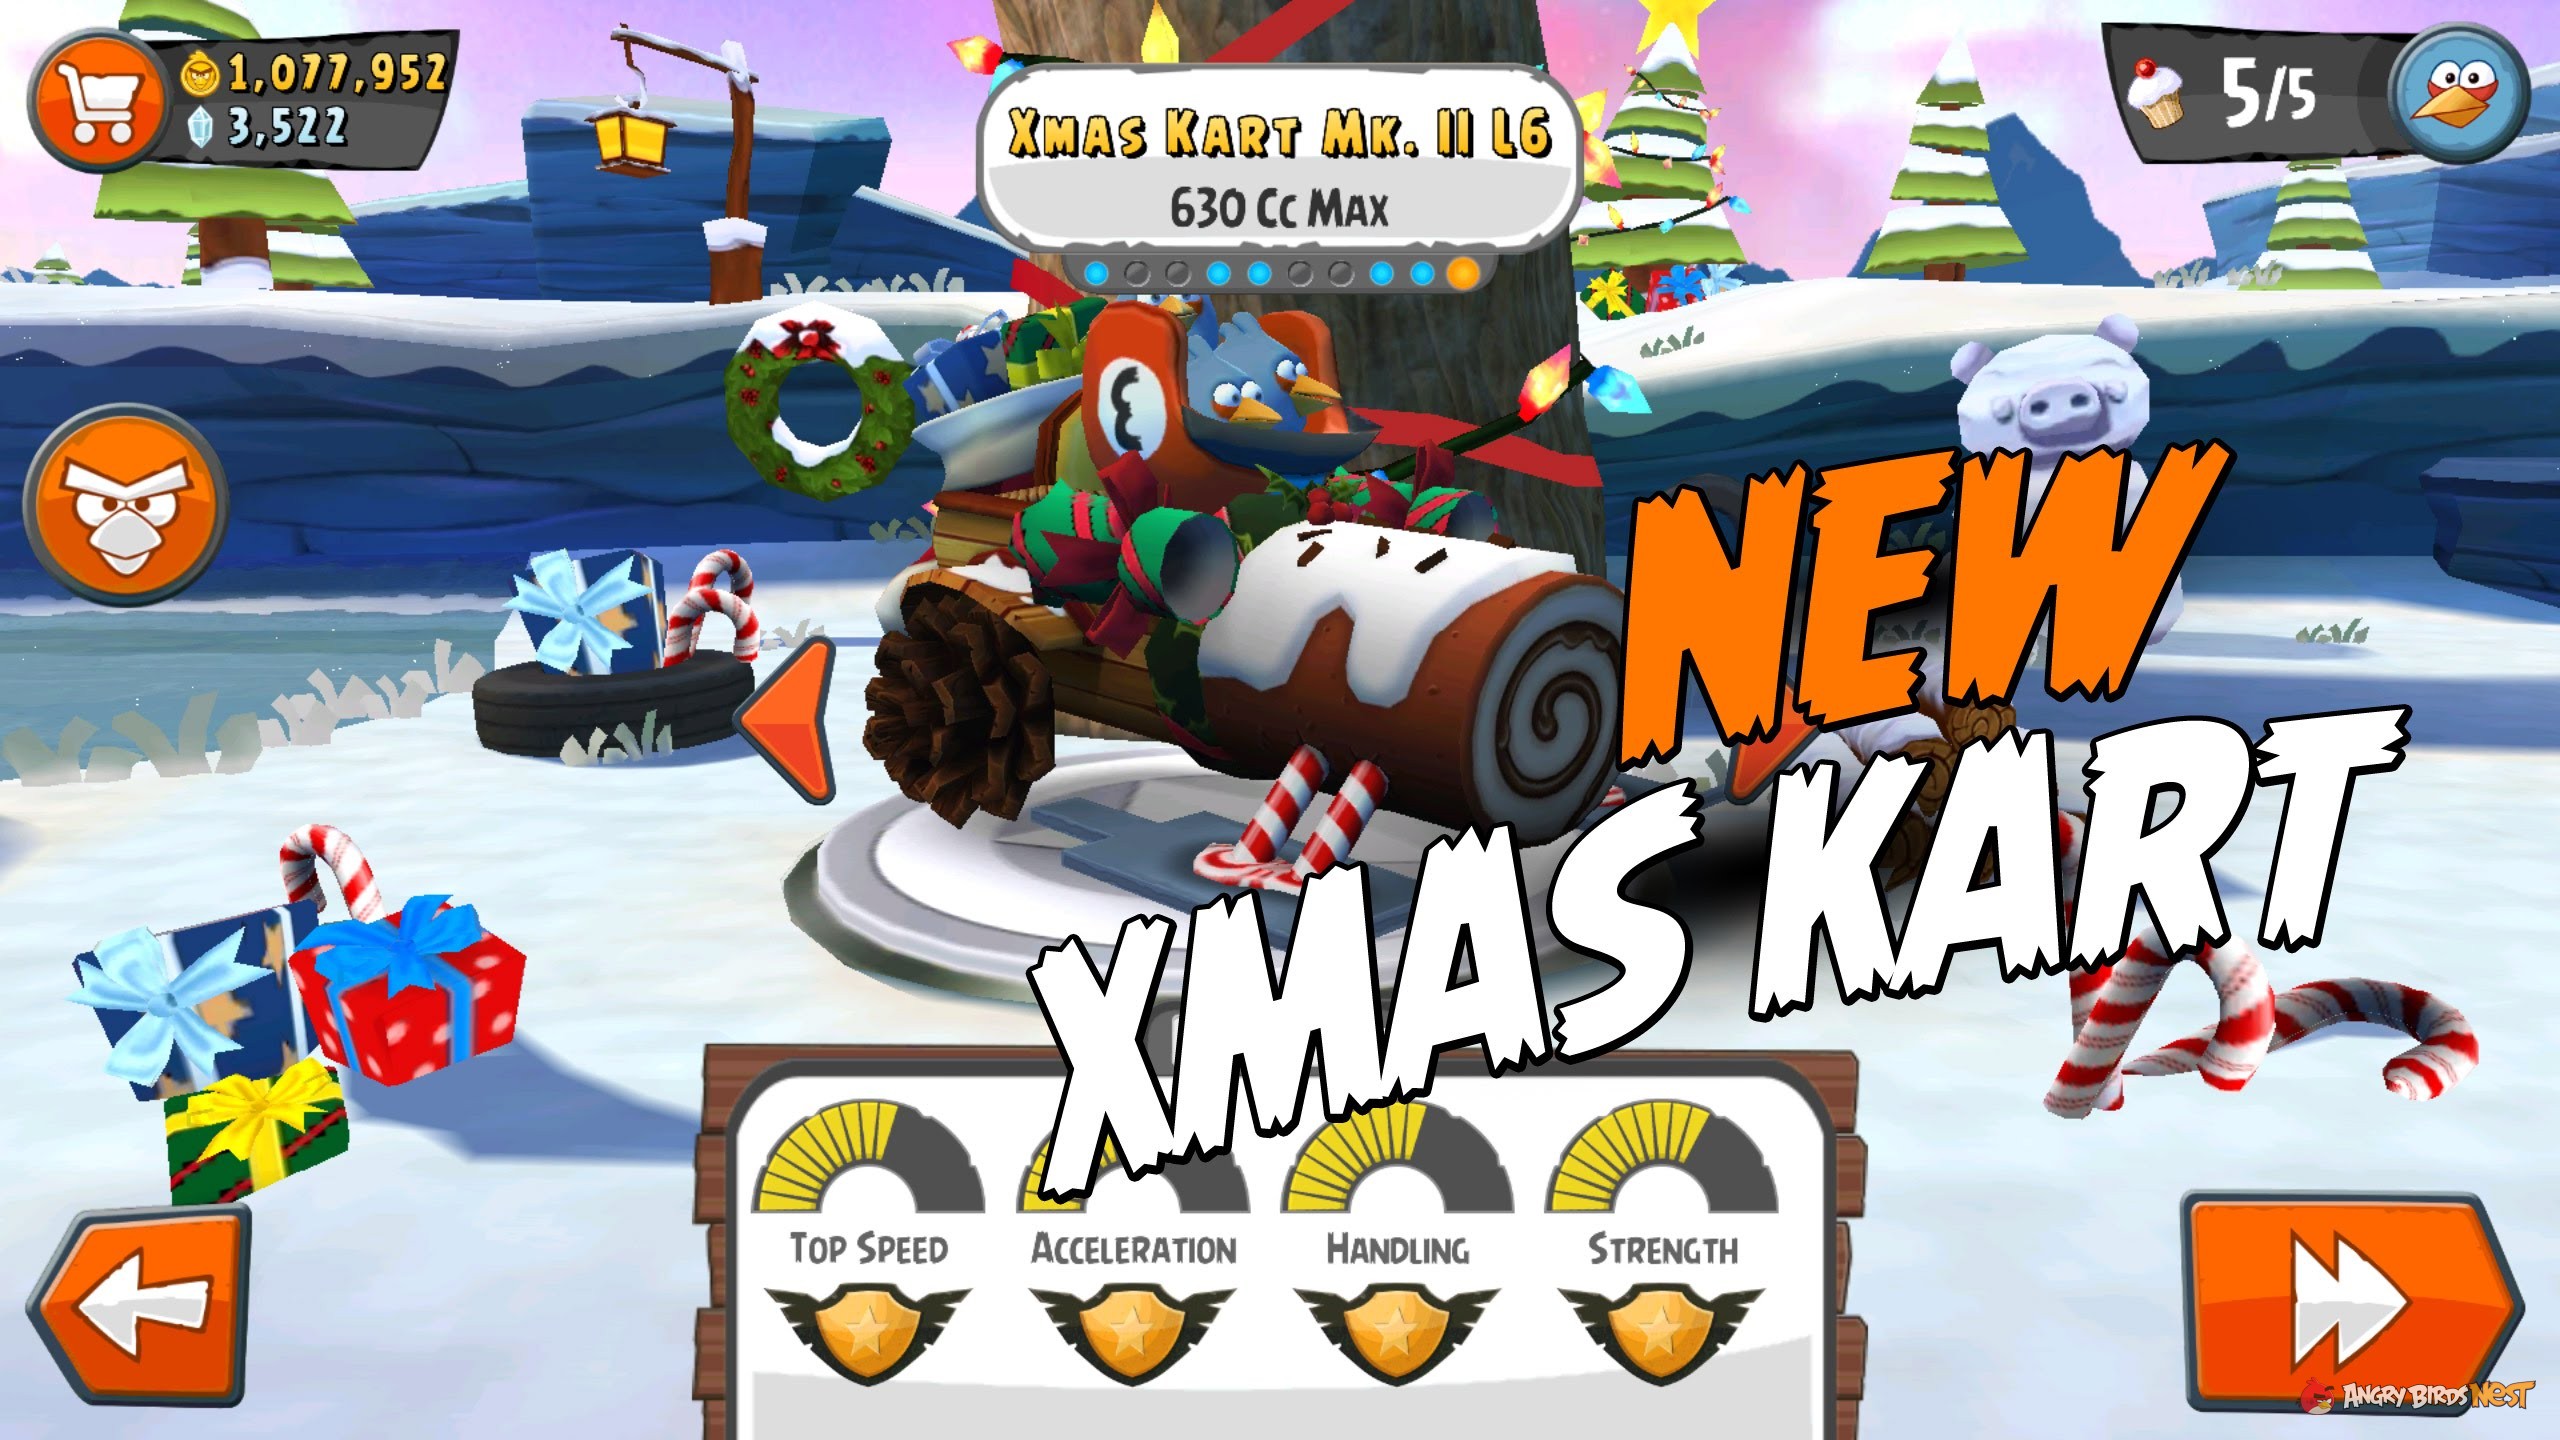 New Angry Birds GO! Xmas Kart Mk II